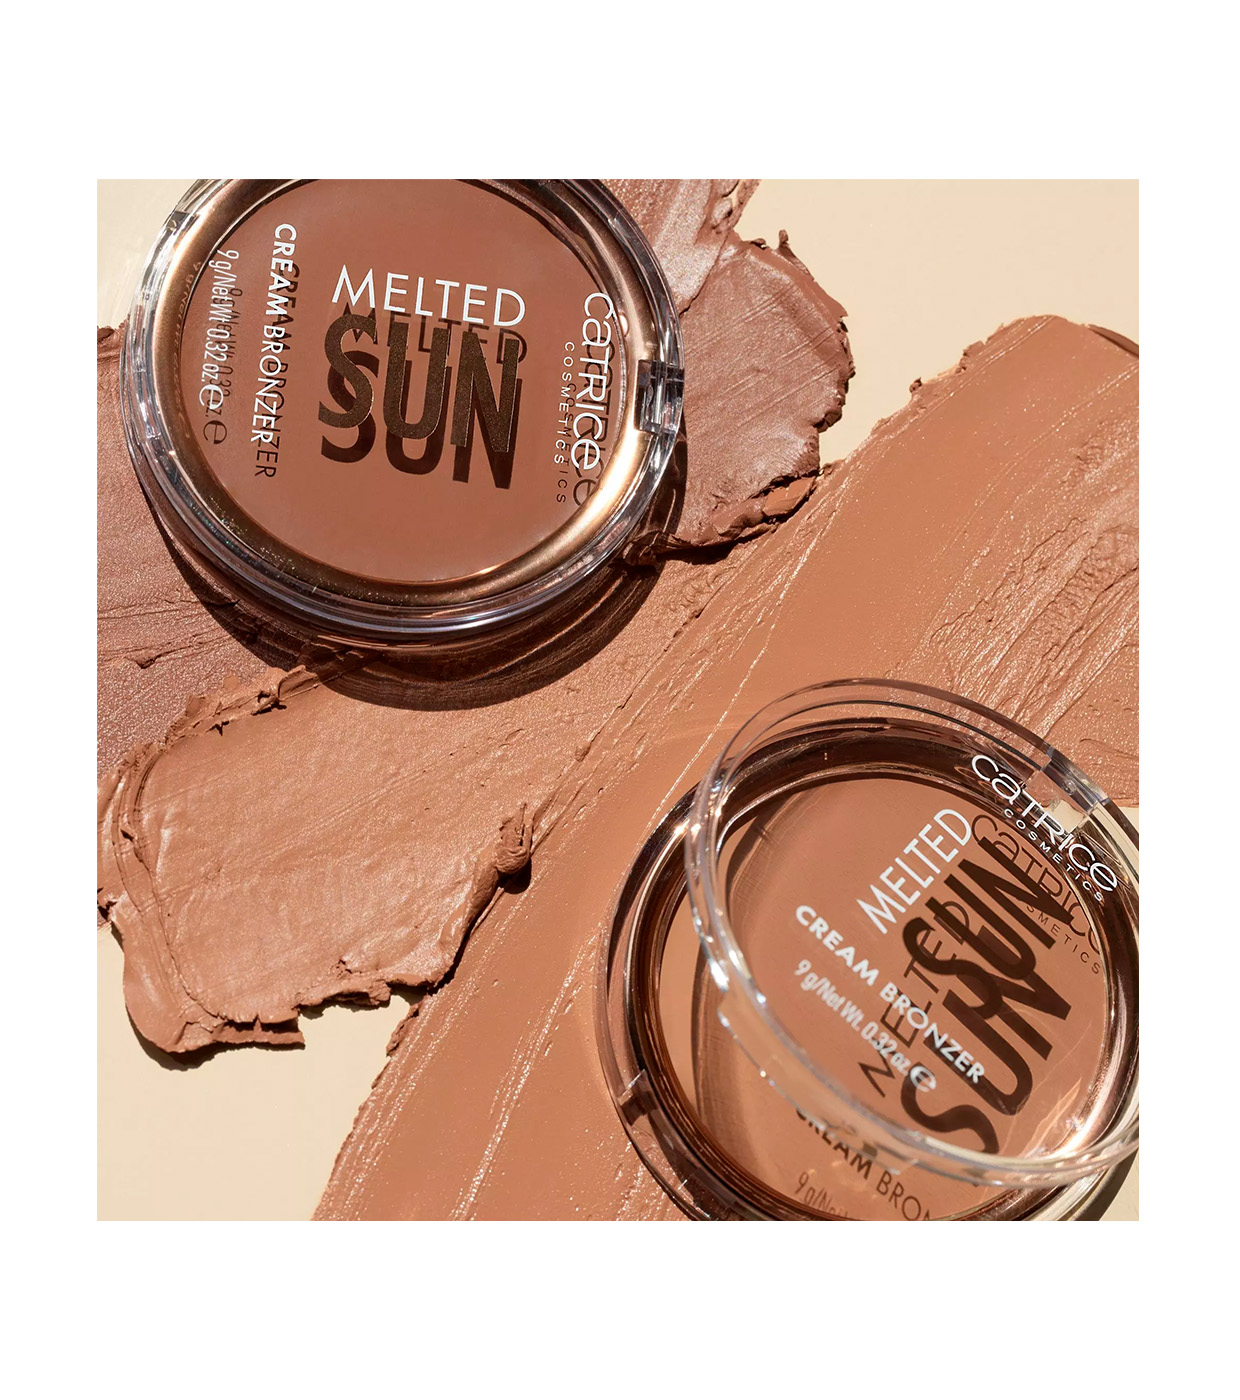 Buy Catrice - Melted Sun Cream Bronzer - 030: Pretty Tanned | Maquillalia